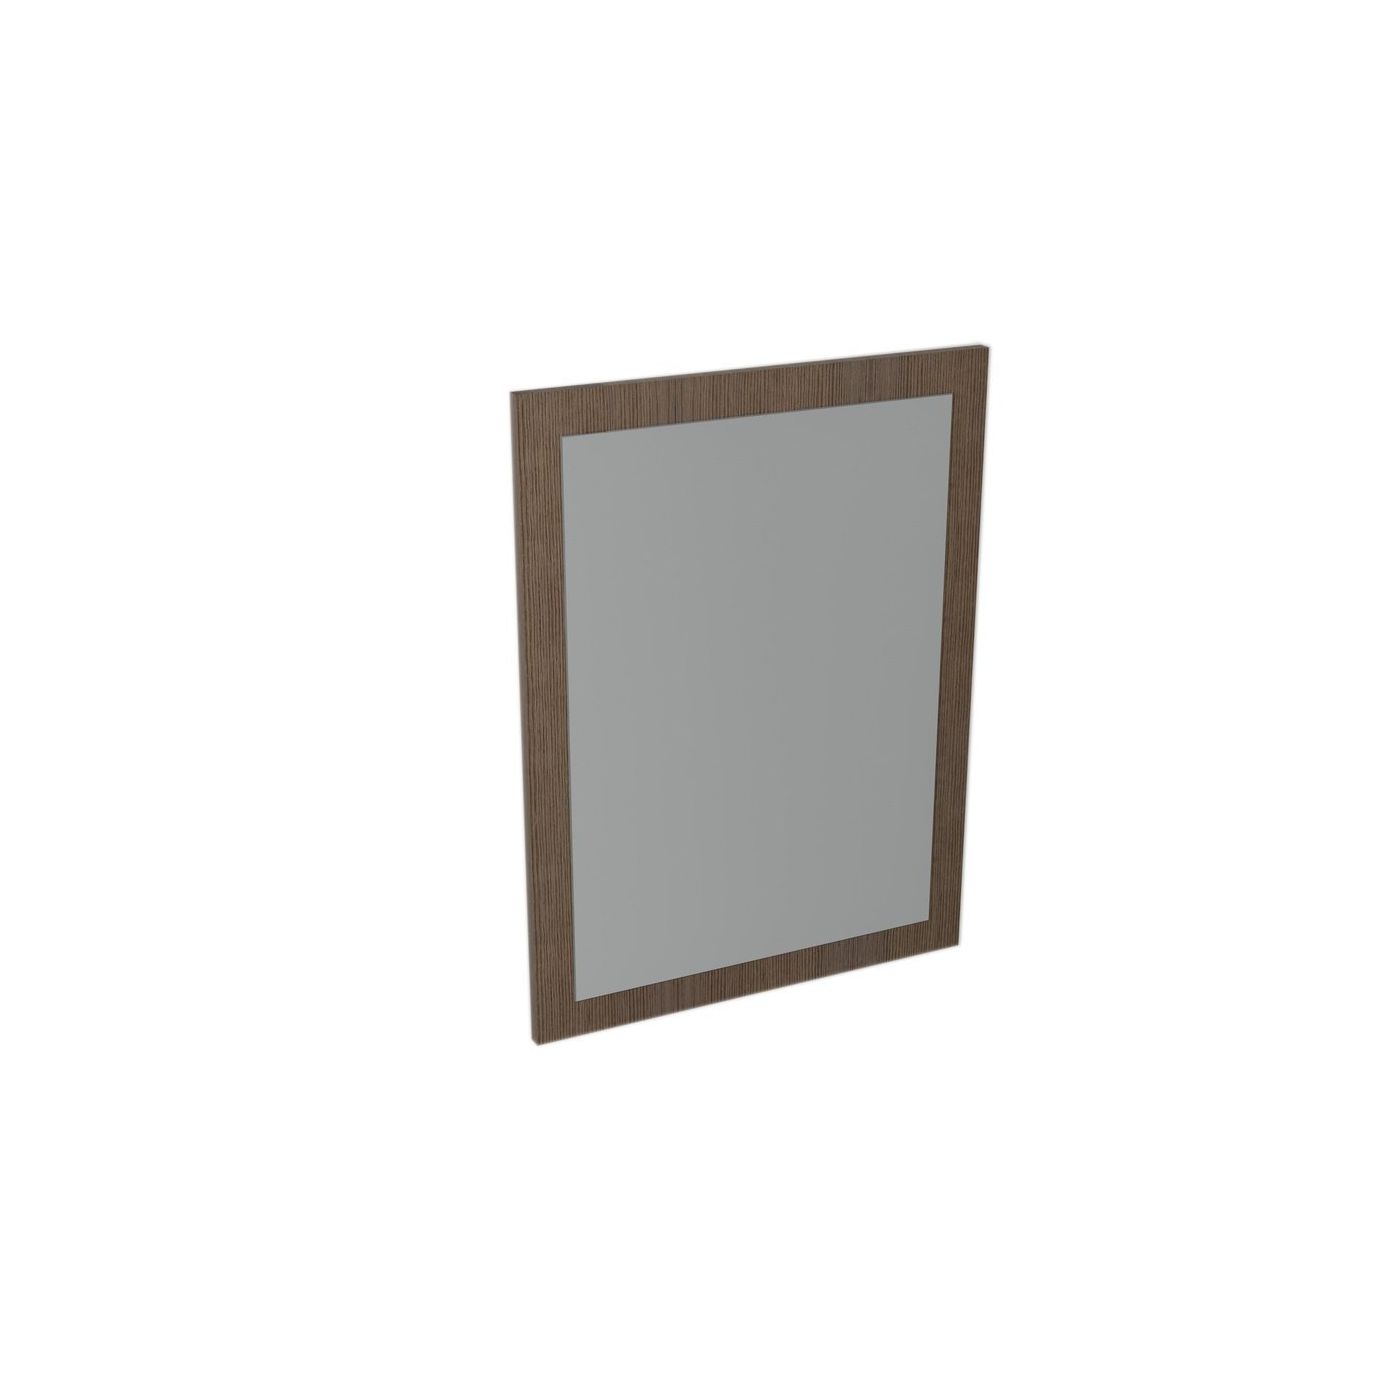 Nirox spiegel met frame 600x800x28mm rustiek eiken